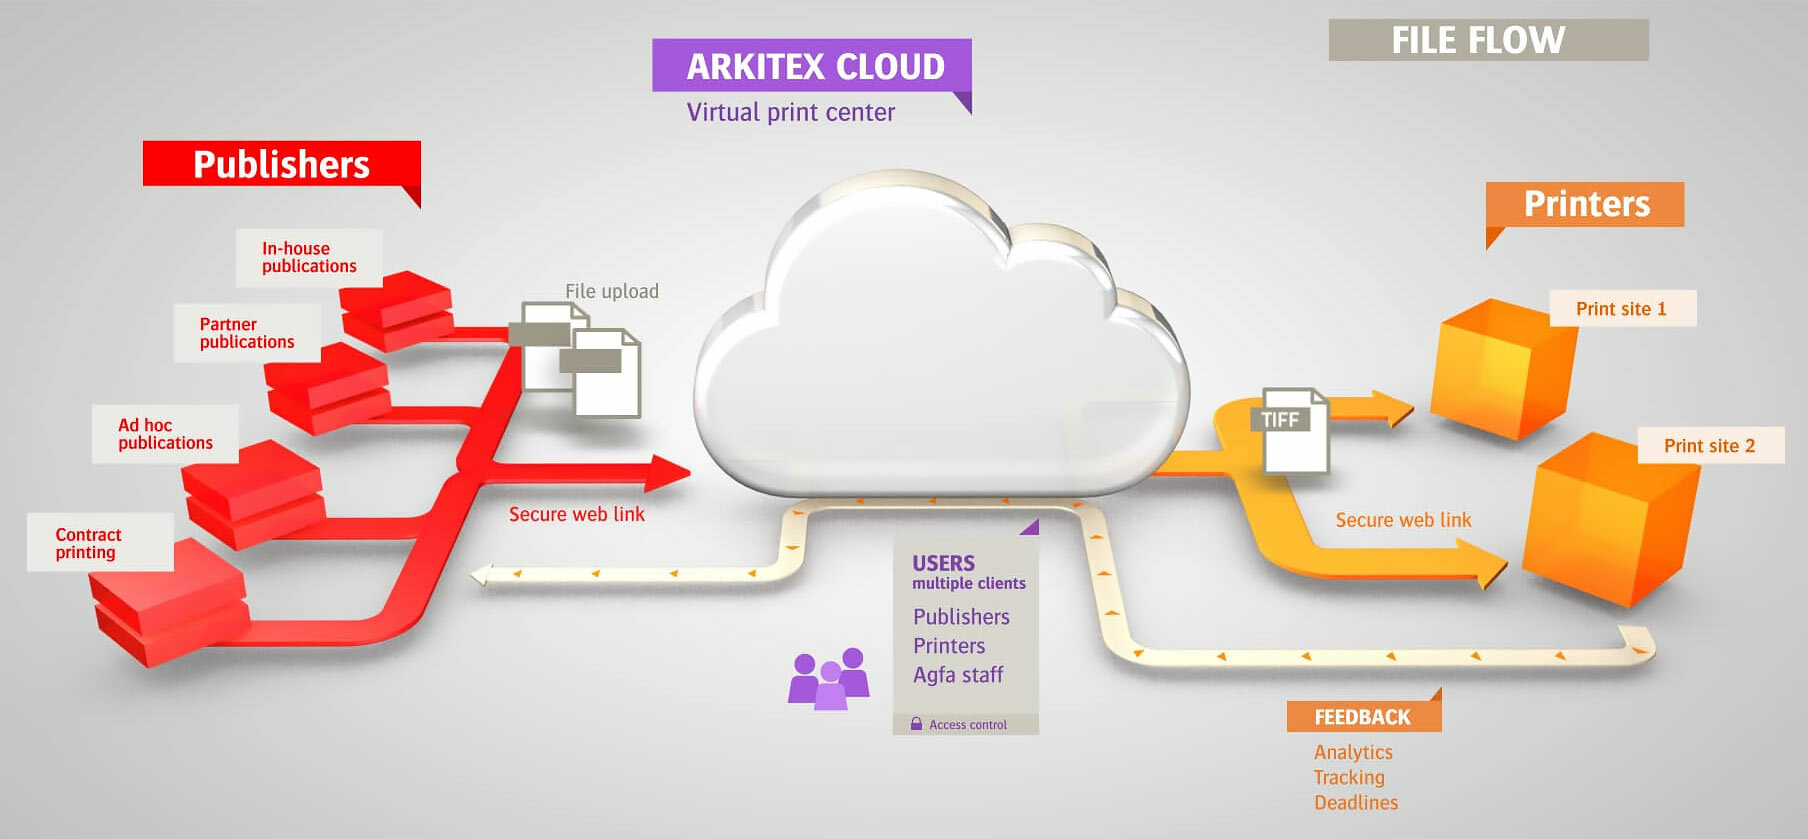 Arkitex Cloud